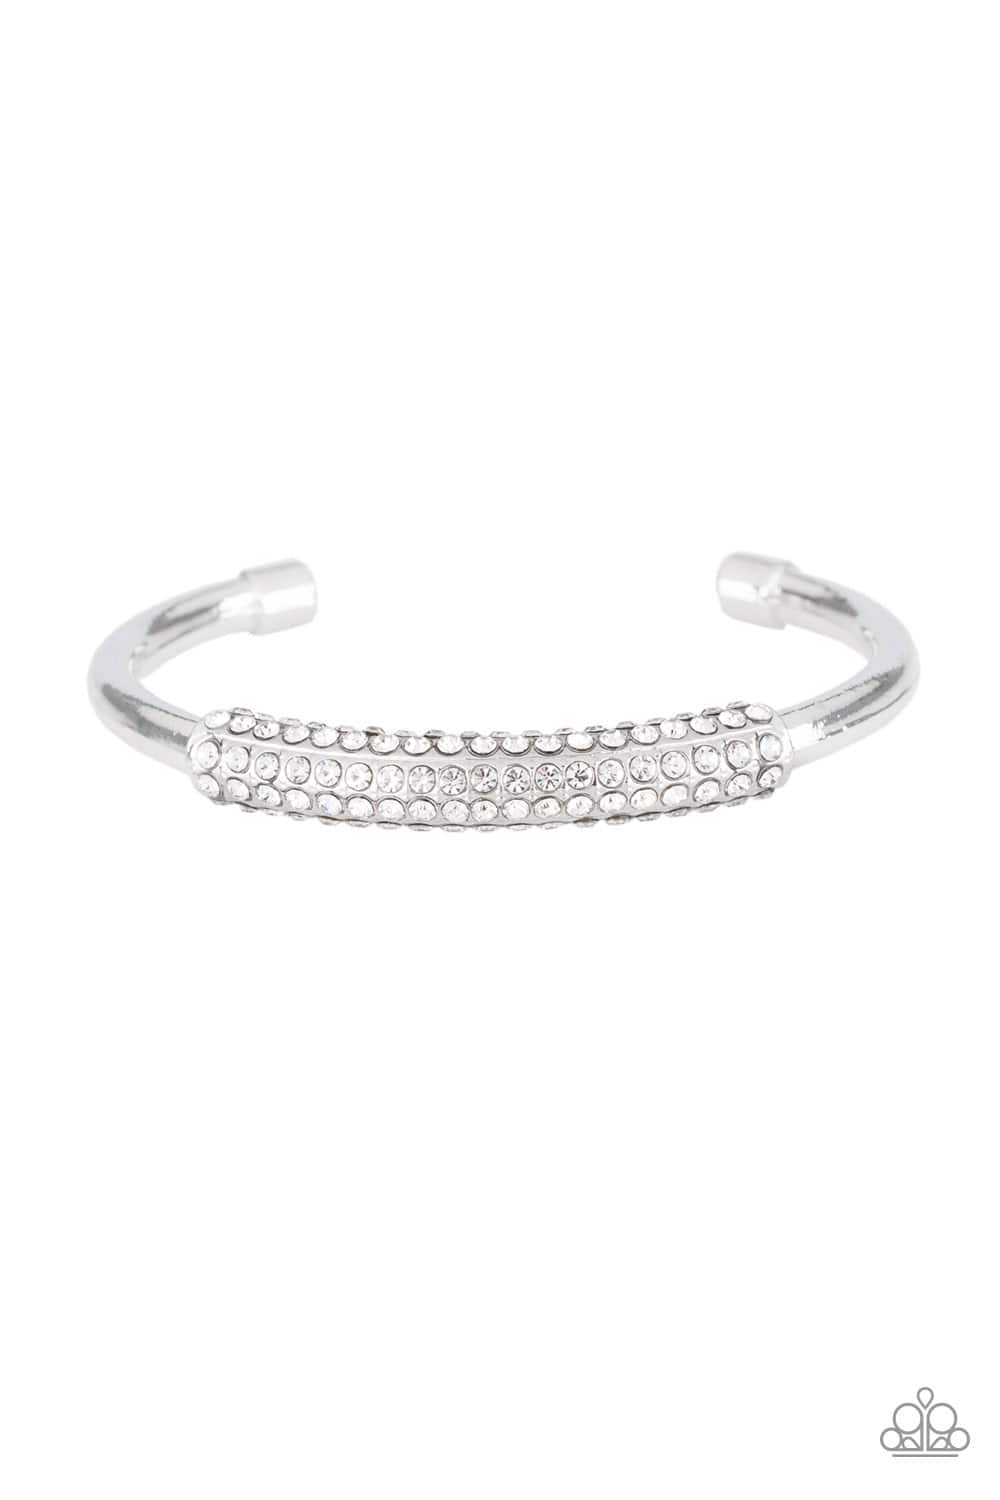 Day to Day Dazzle - White Rhinestone Cuff Bracelet - Paparazzi Accessories - GlaMarous Titi Jewels